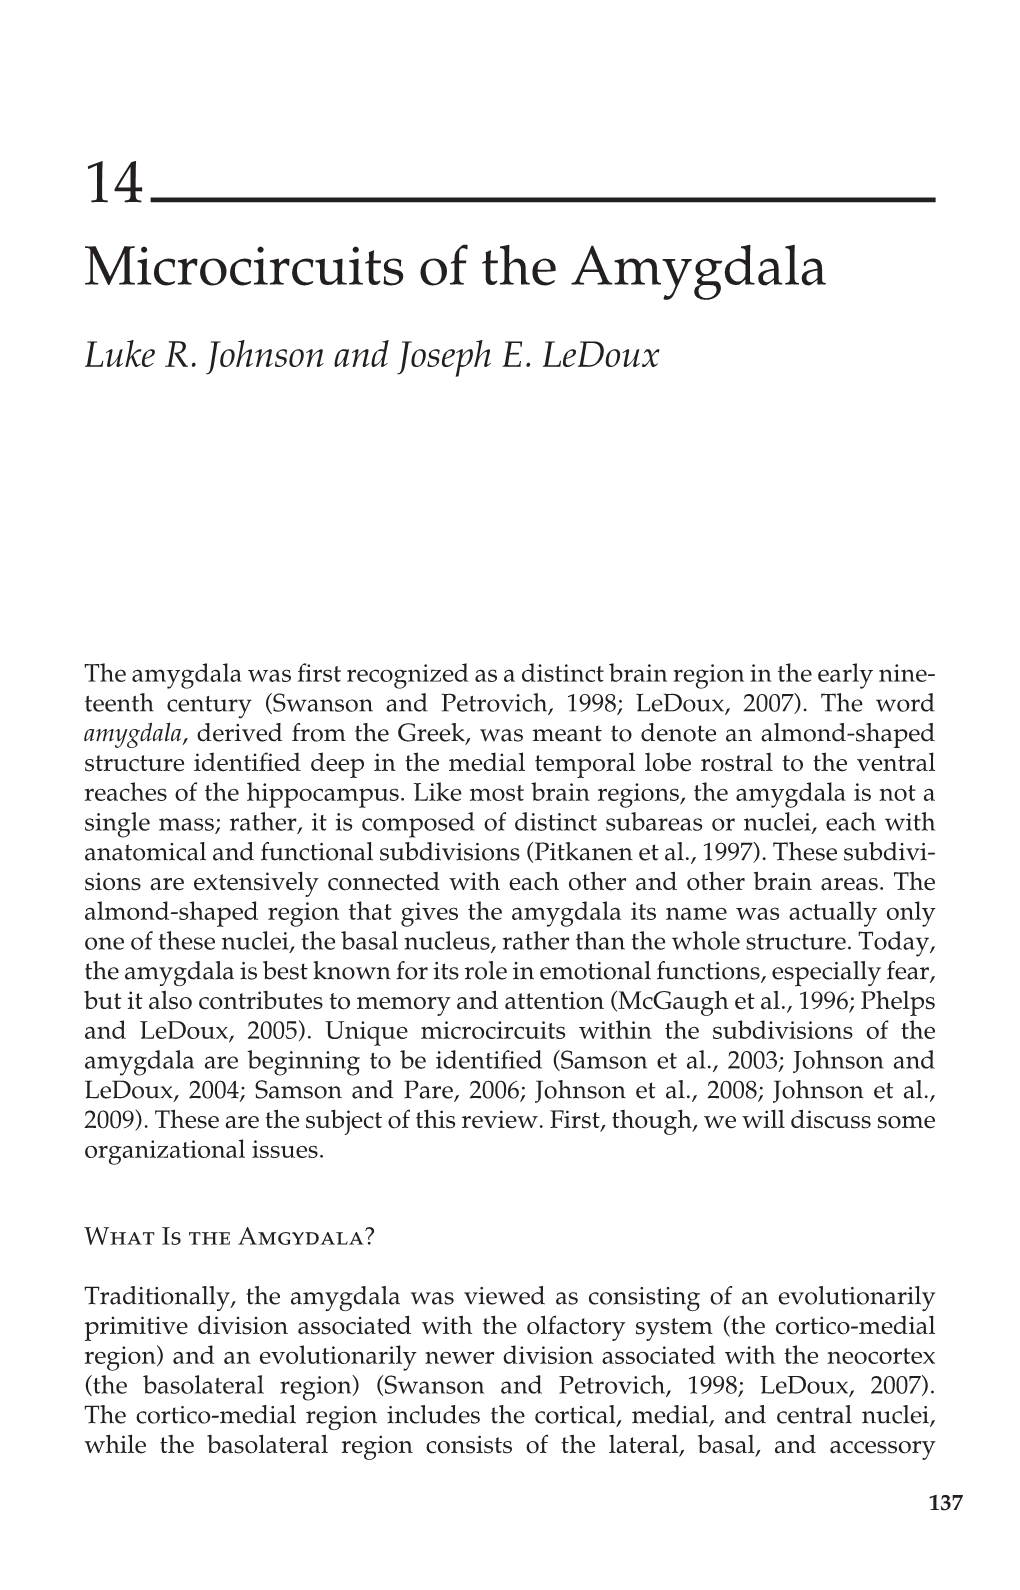 Microcircuits of the Amygdala (Johnson & Ledoux)